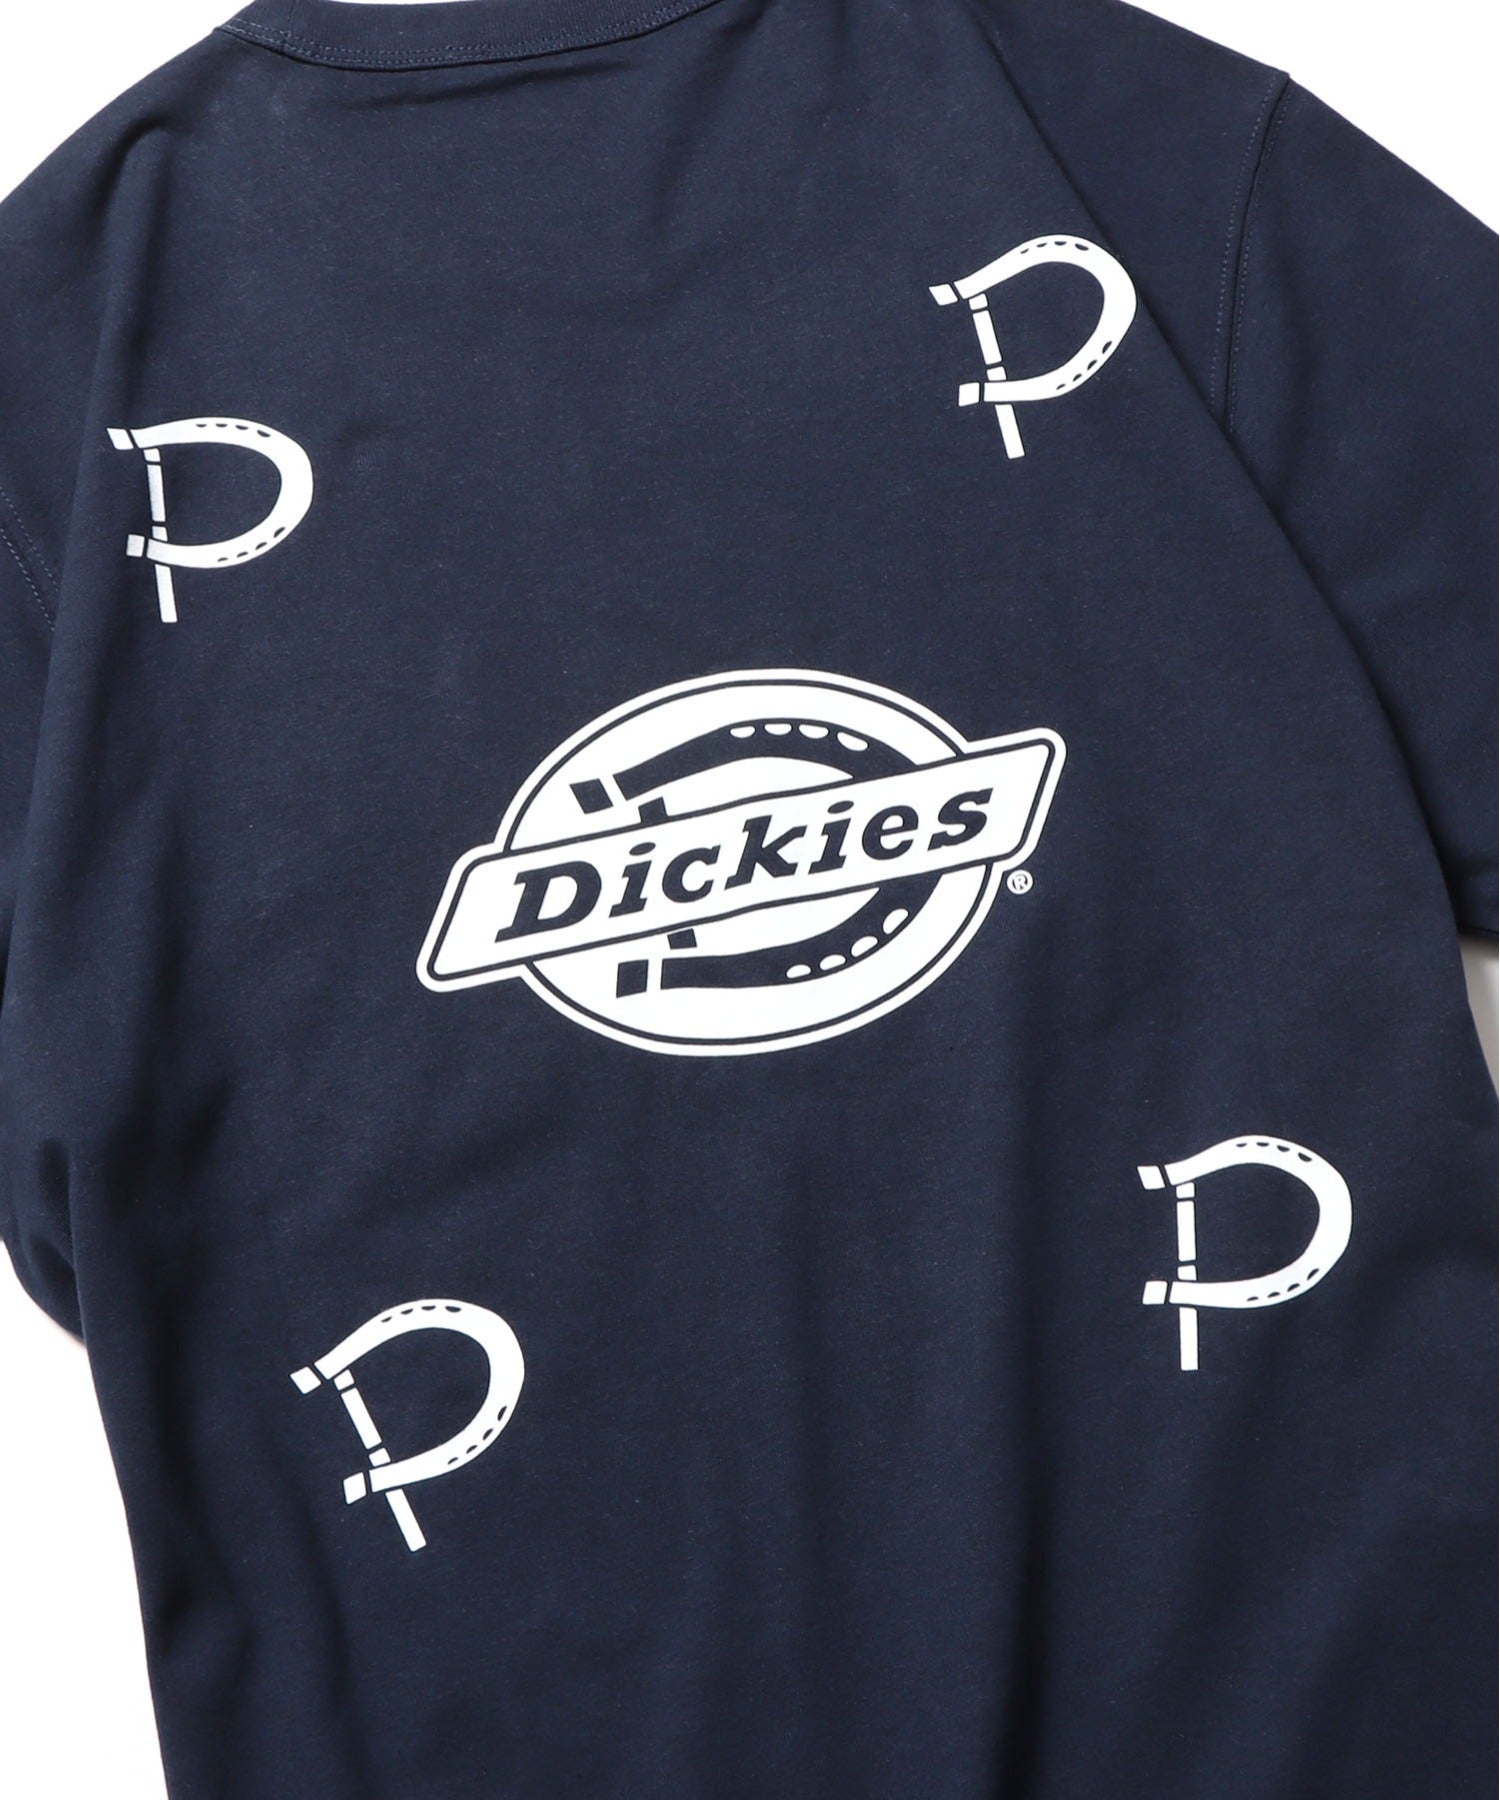 Pop/Dickies Shortleeve T-Shirt